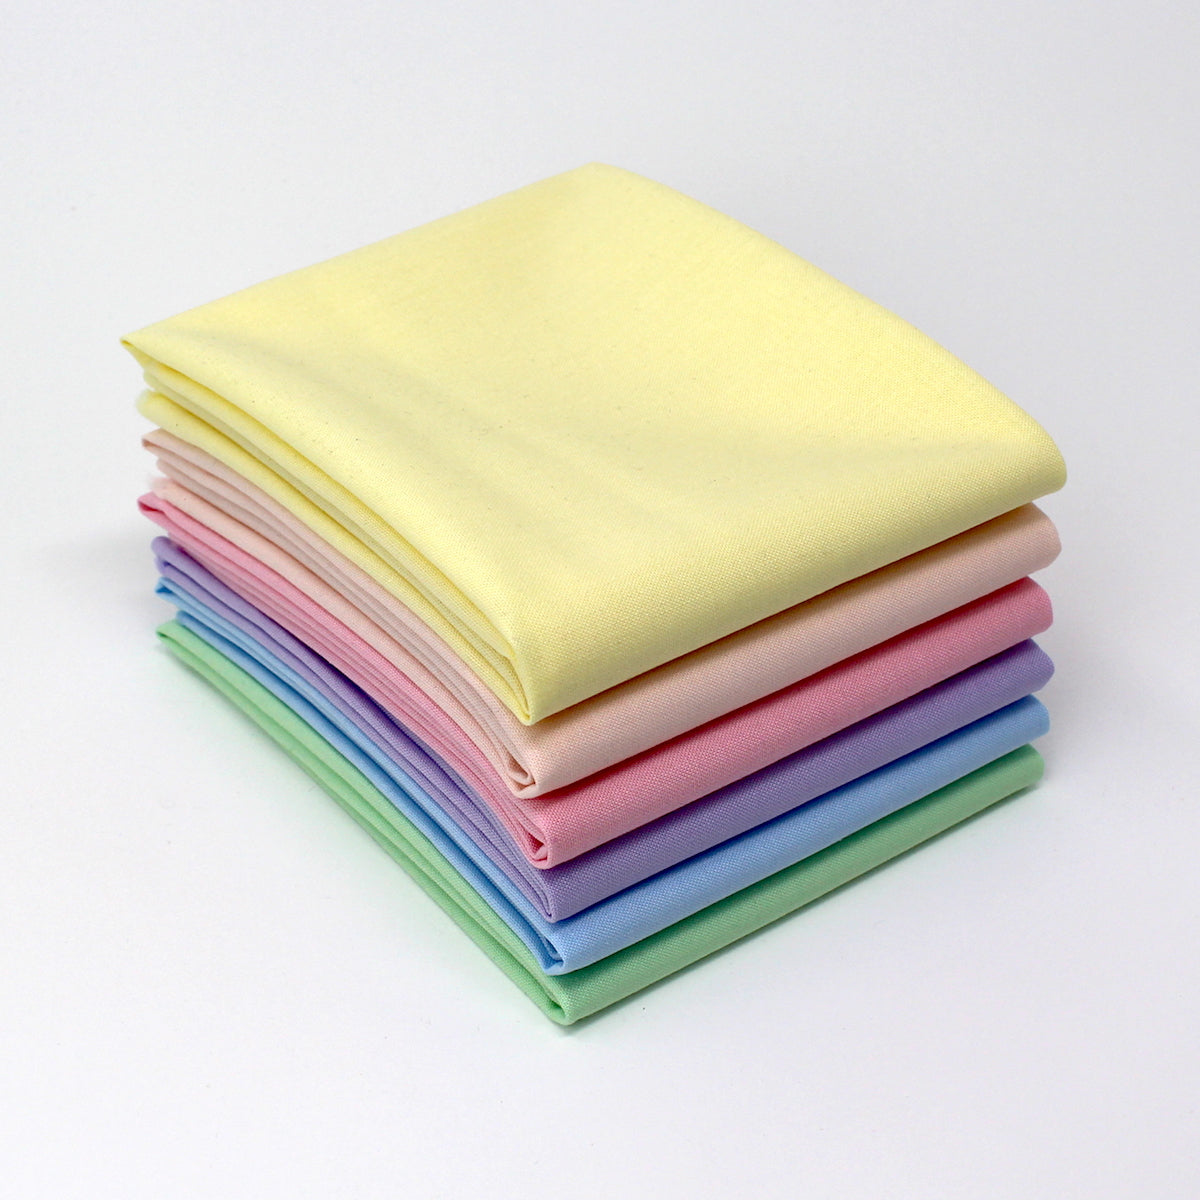 Threadart 6 Fat Quarter Bundles - Rainbow Solids 100% Cotton Fabric -  Premium 100% Cotton Quilting Fabric - No Duplicates - Full Size Fat  Quarters 18x21 